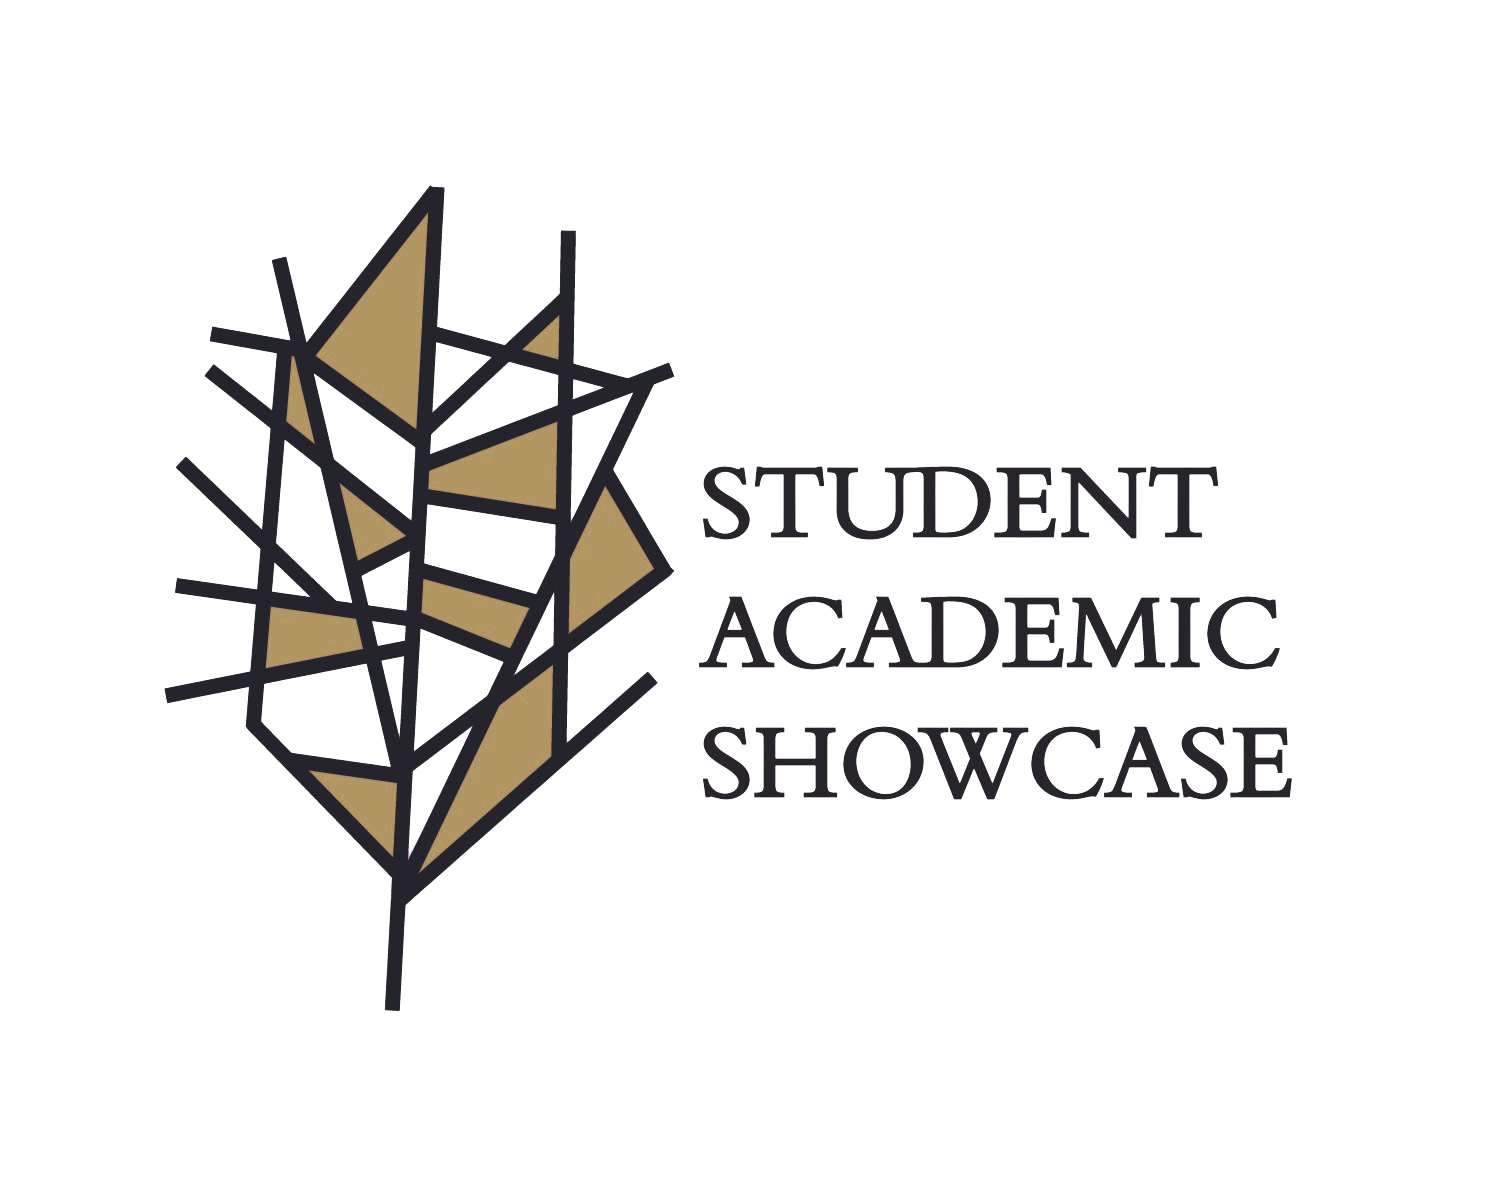 Student Academic Showcase logo. A geometirc illustration of a Linden tree